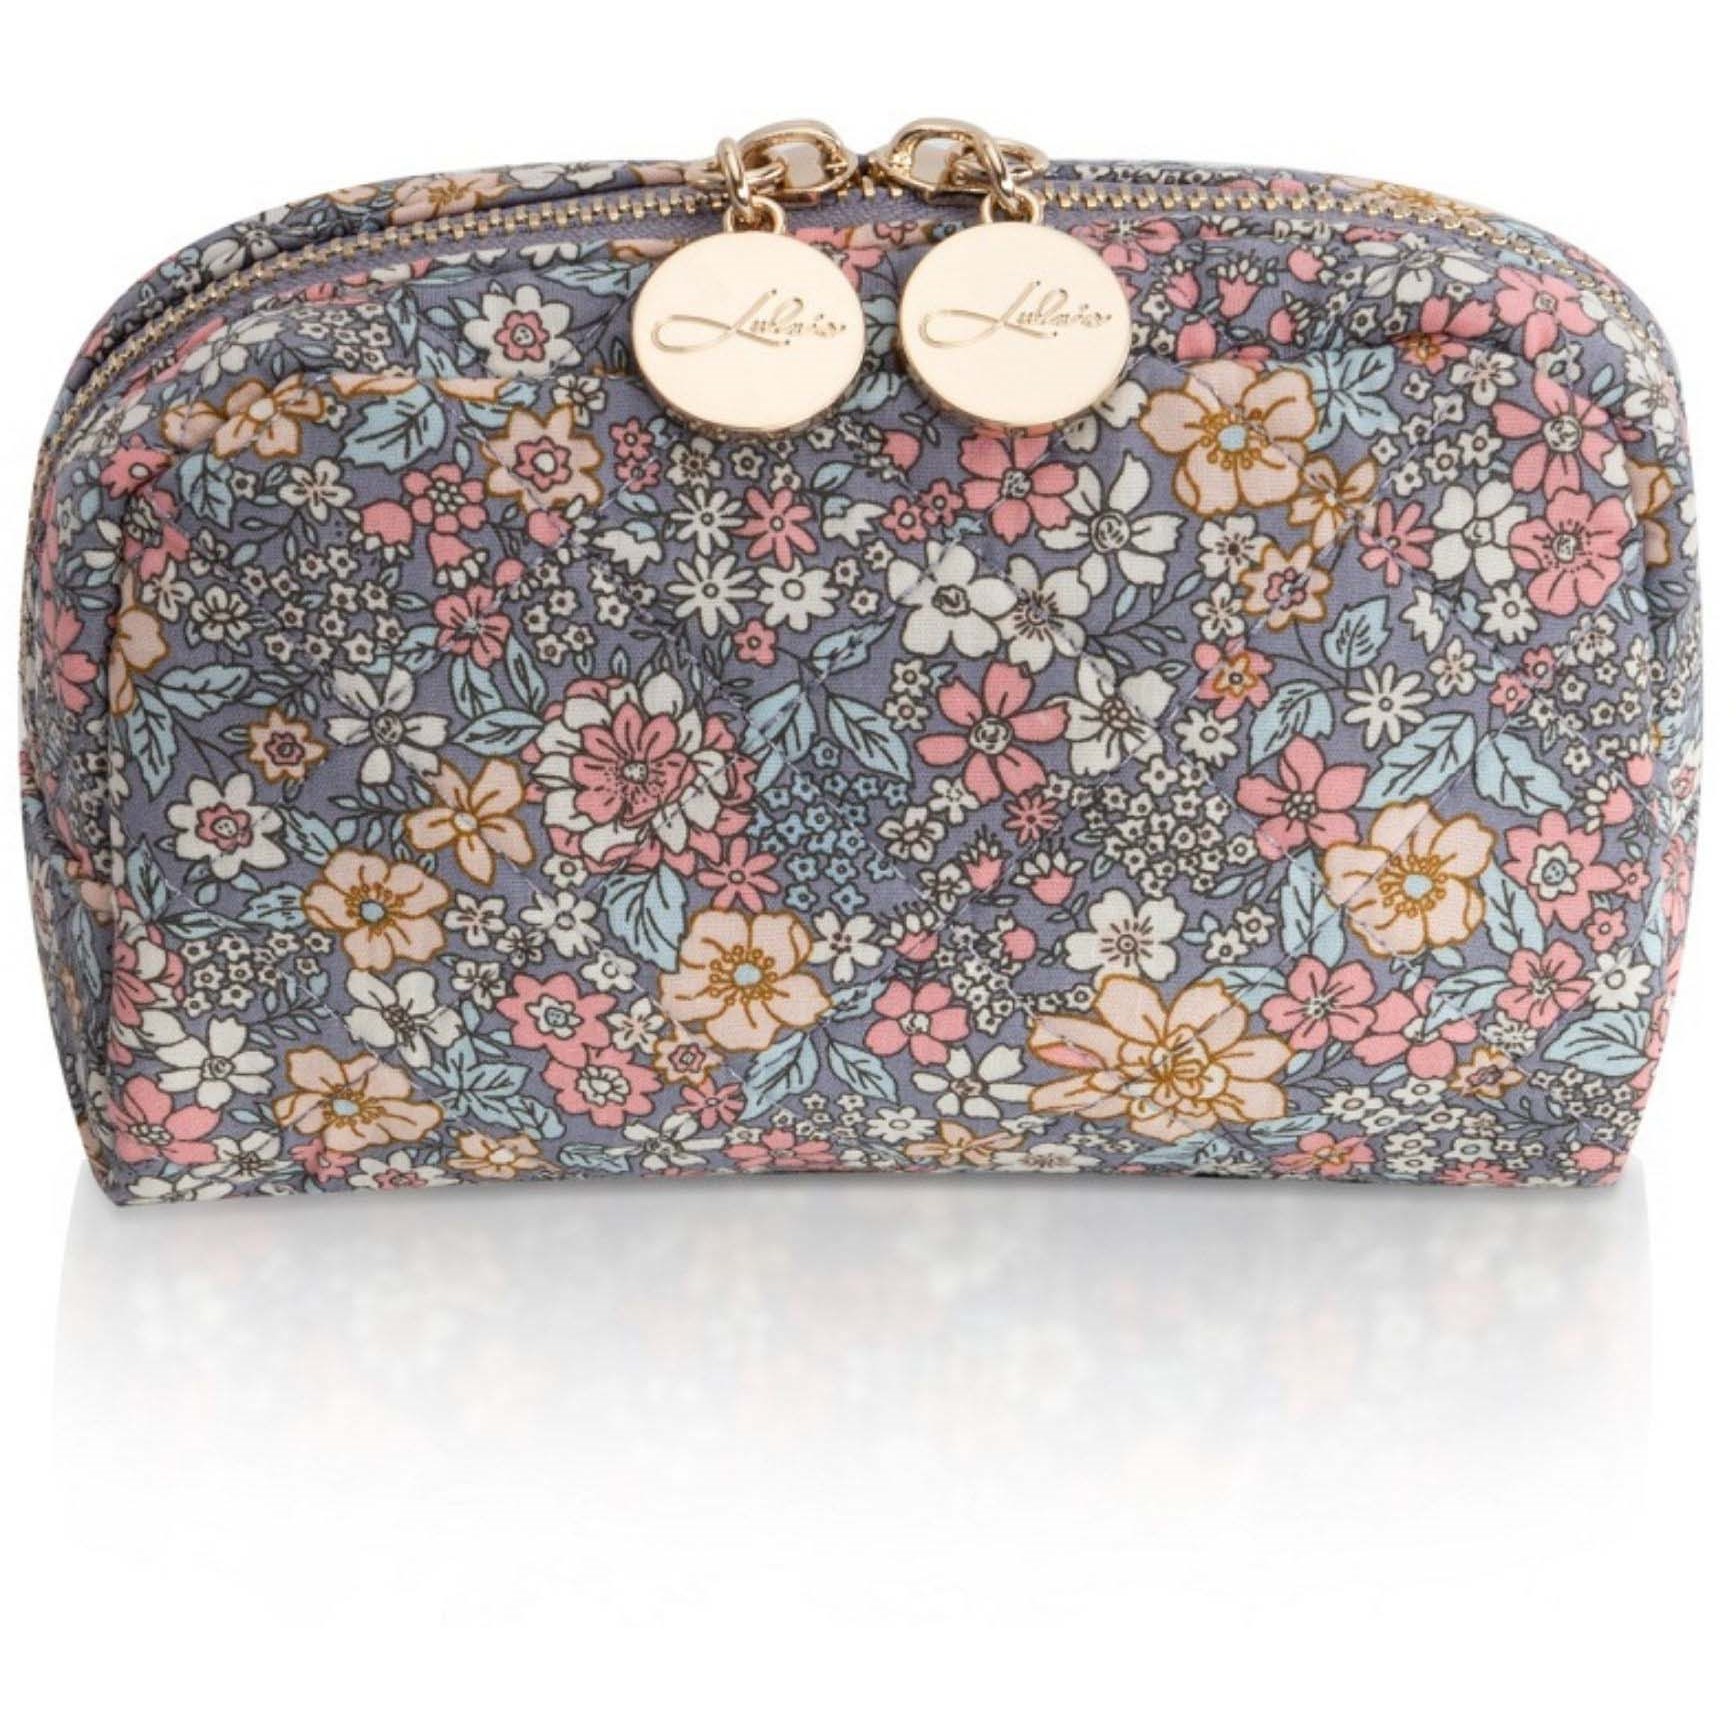 Bilde av Lulu's Accessories Cosmetic Bag Small Floral Mix